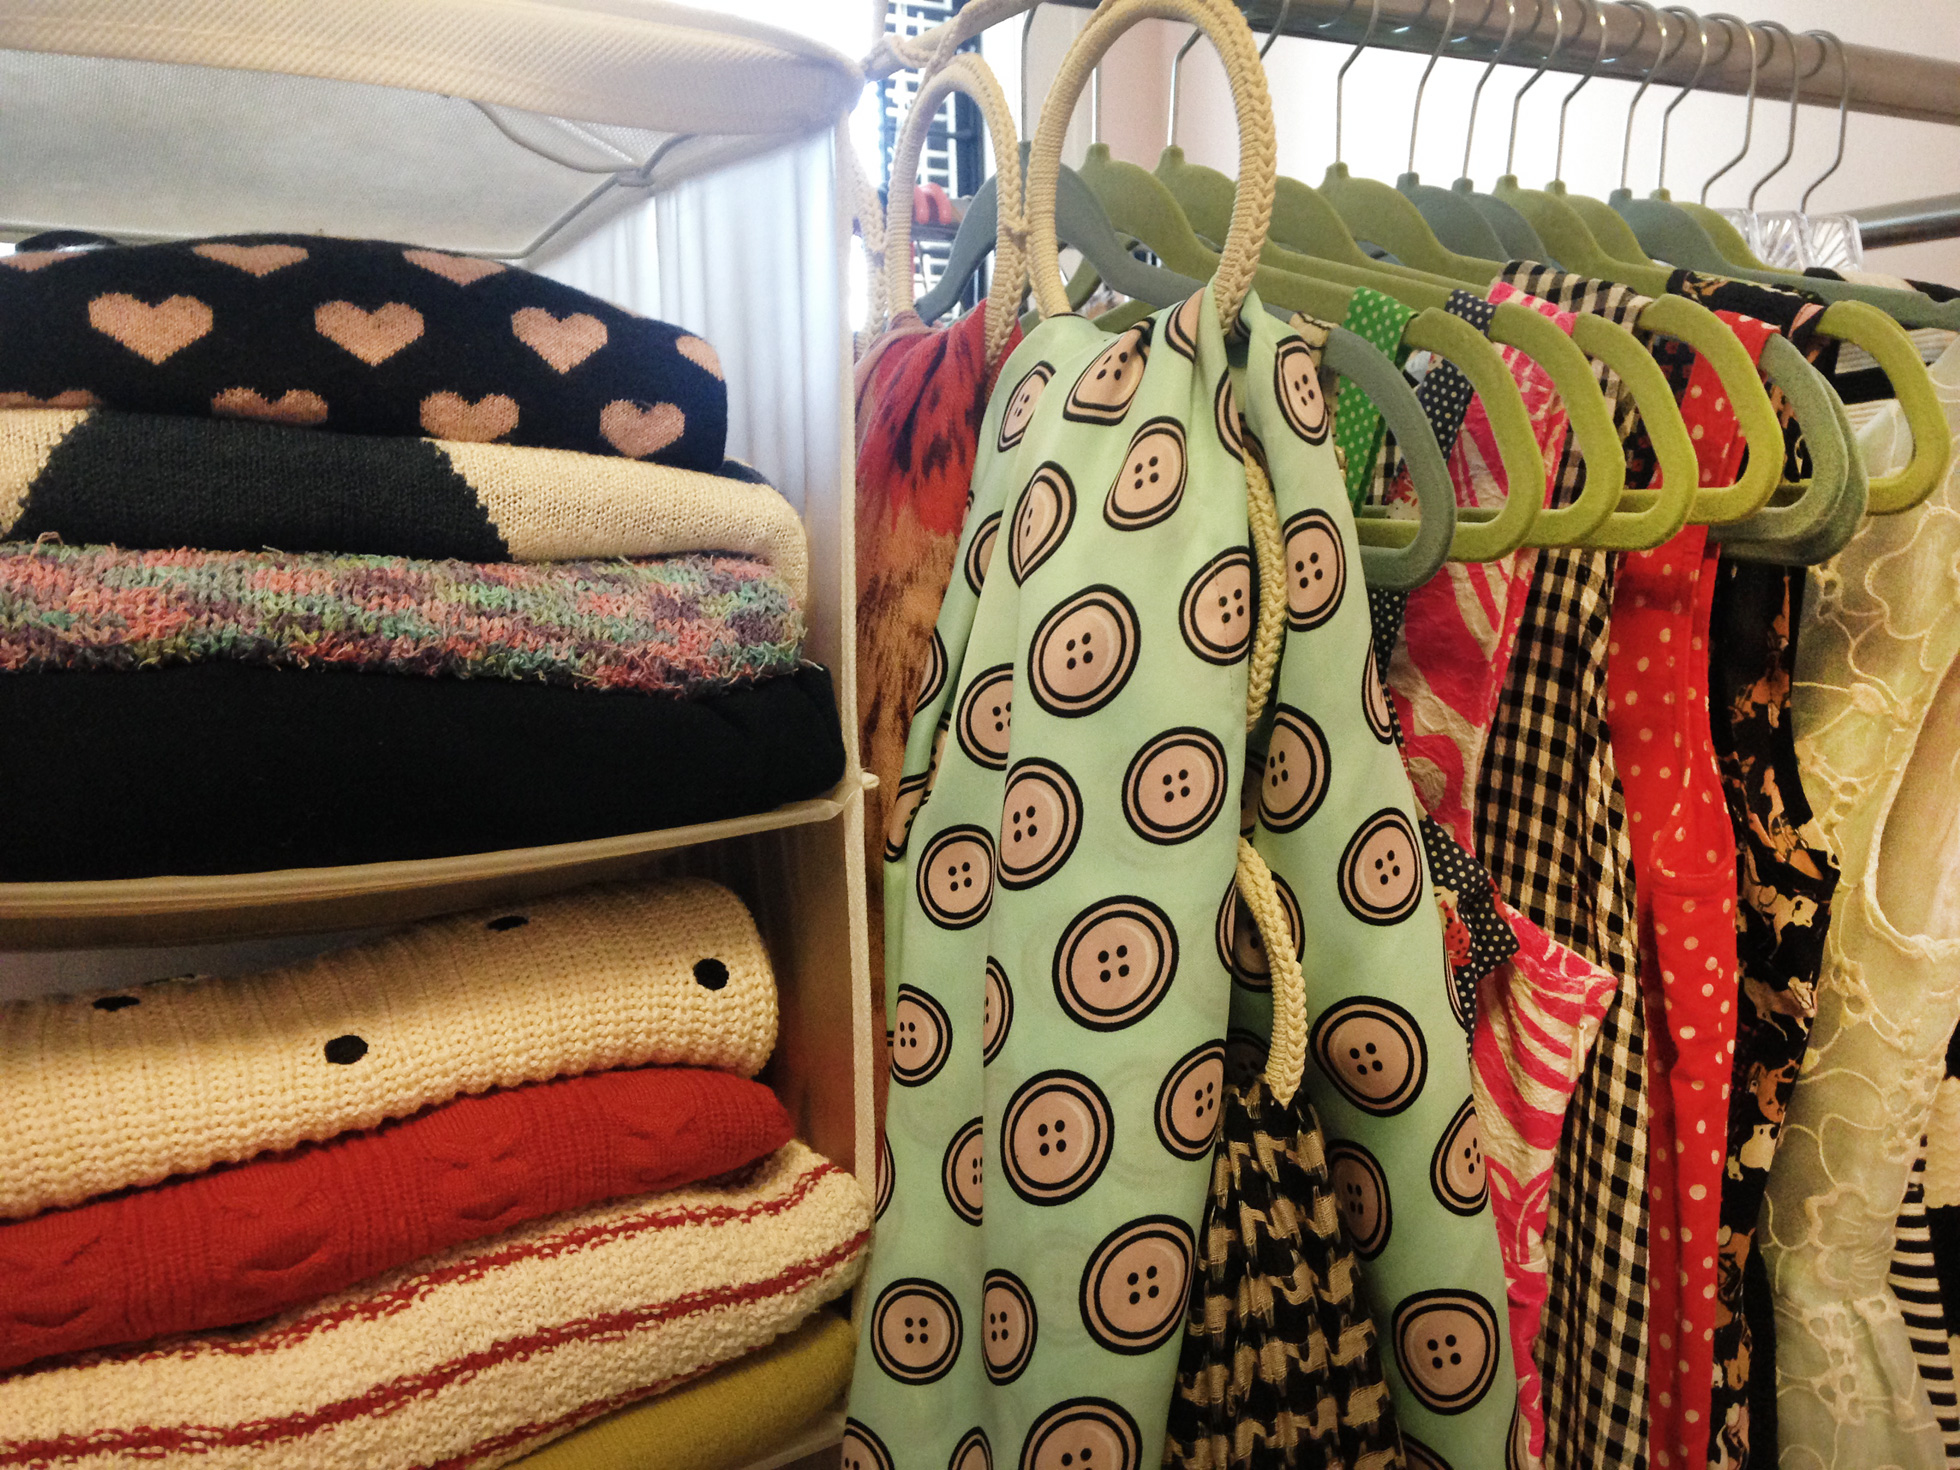 Clothes organized in a closet